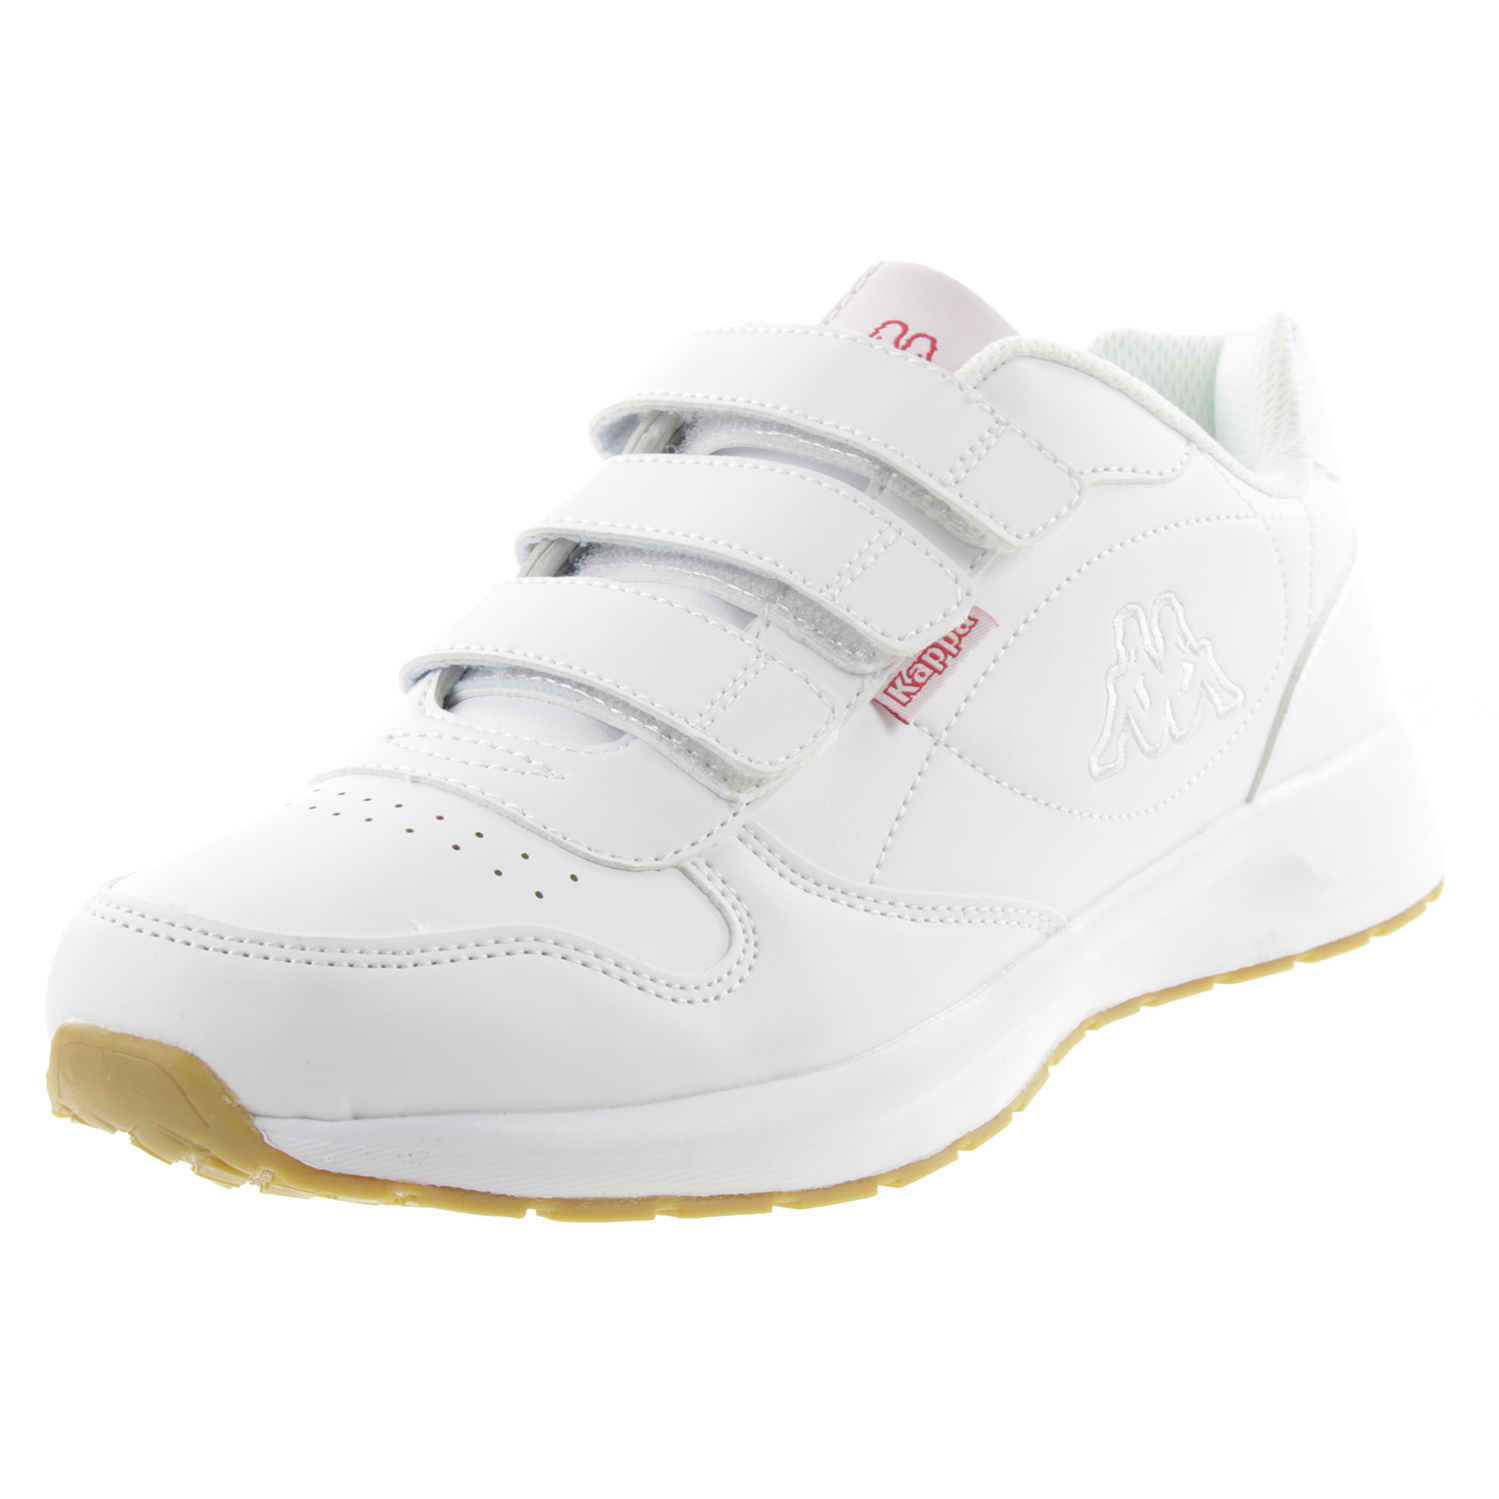 Kappa Unisex-Erwachsene Base VL Sneaker, Weiß (White 1010), 44 EU